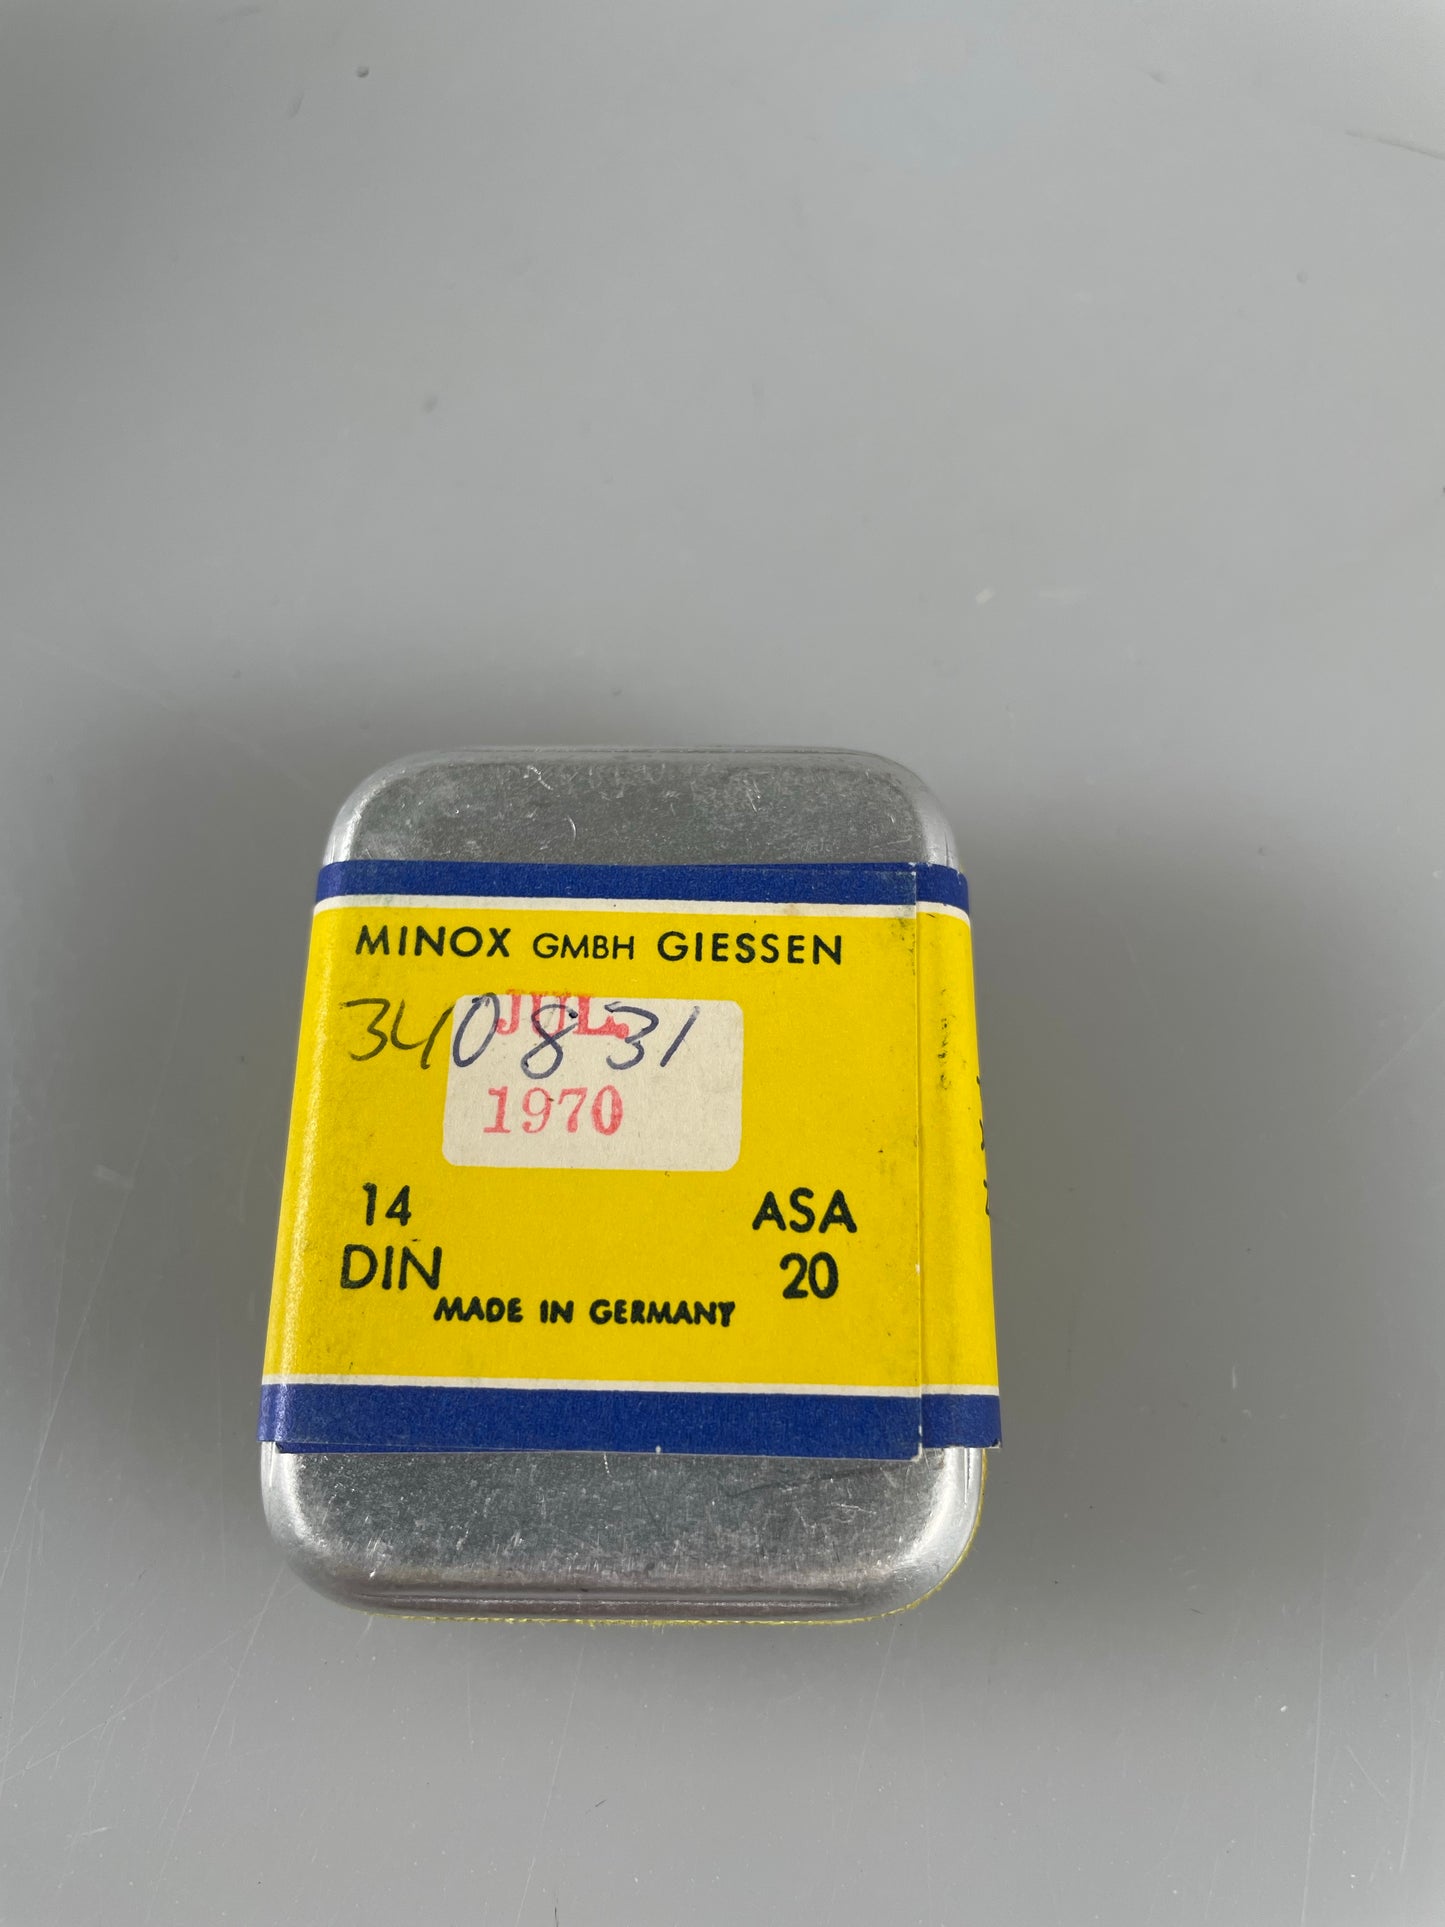 MINOX Film ADOX KB14 PAN ASA 20 2×50 exp.  Rare, Sealed, Expired 1970